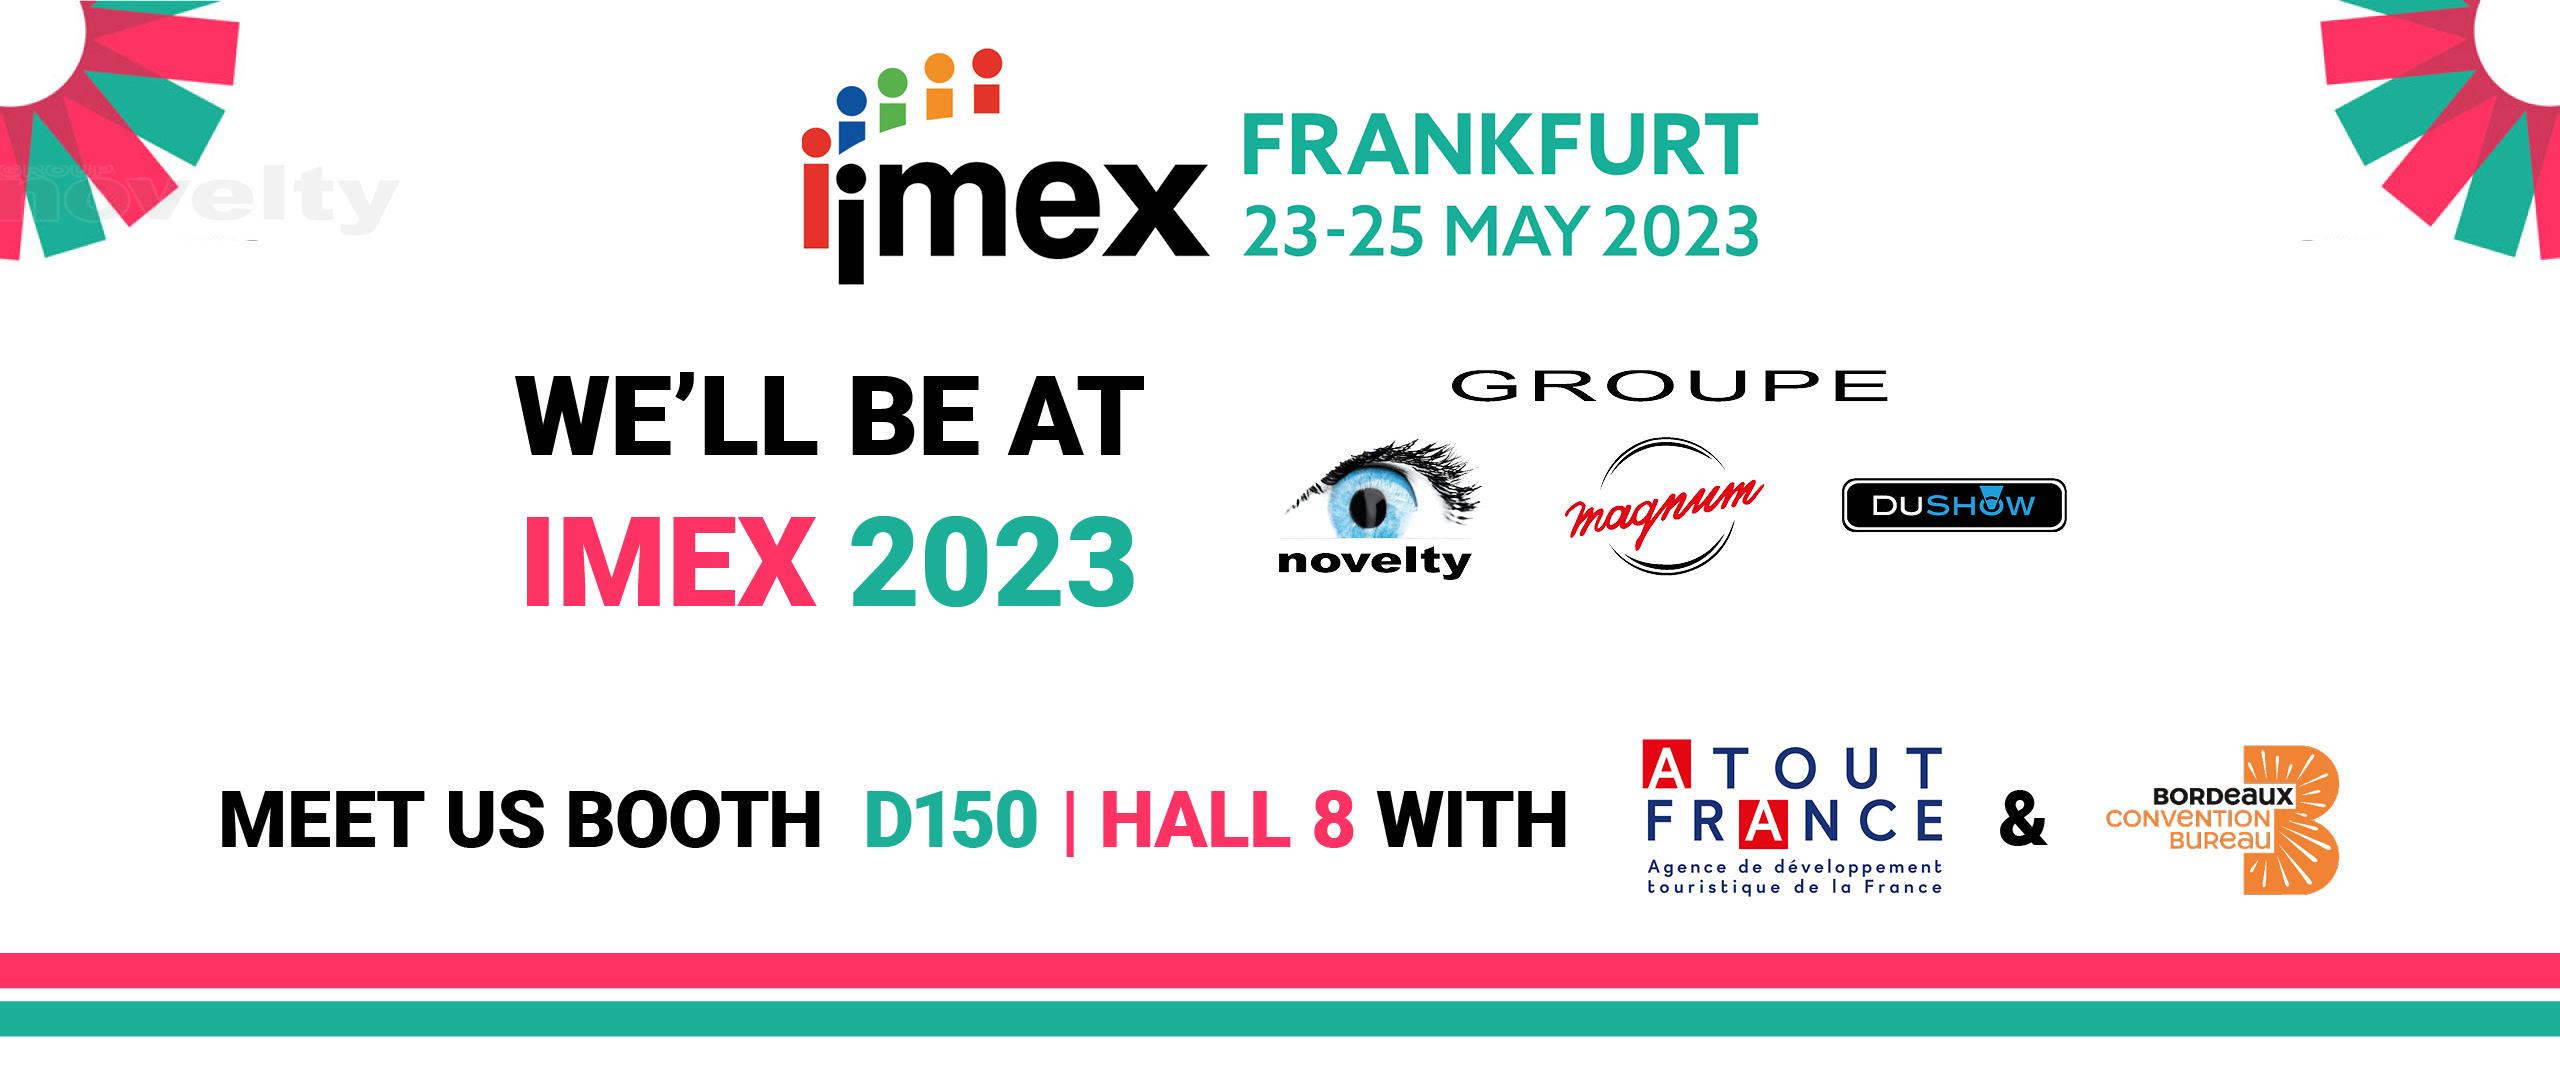 Visuel Groupe NOVELTY-MAGNUM-DUSHOW | IMEX 2023 | Frankfurt 